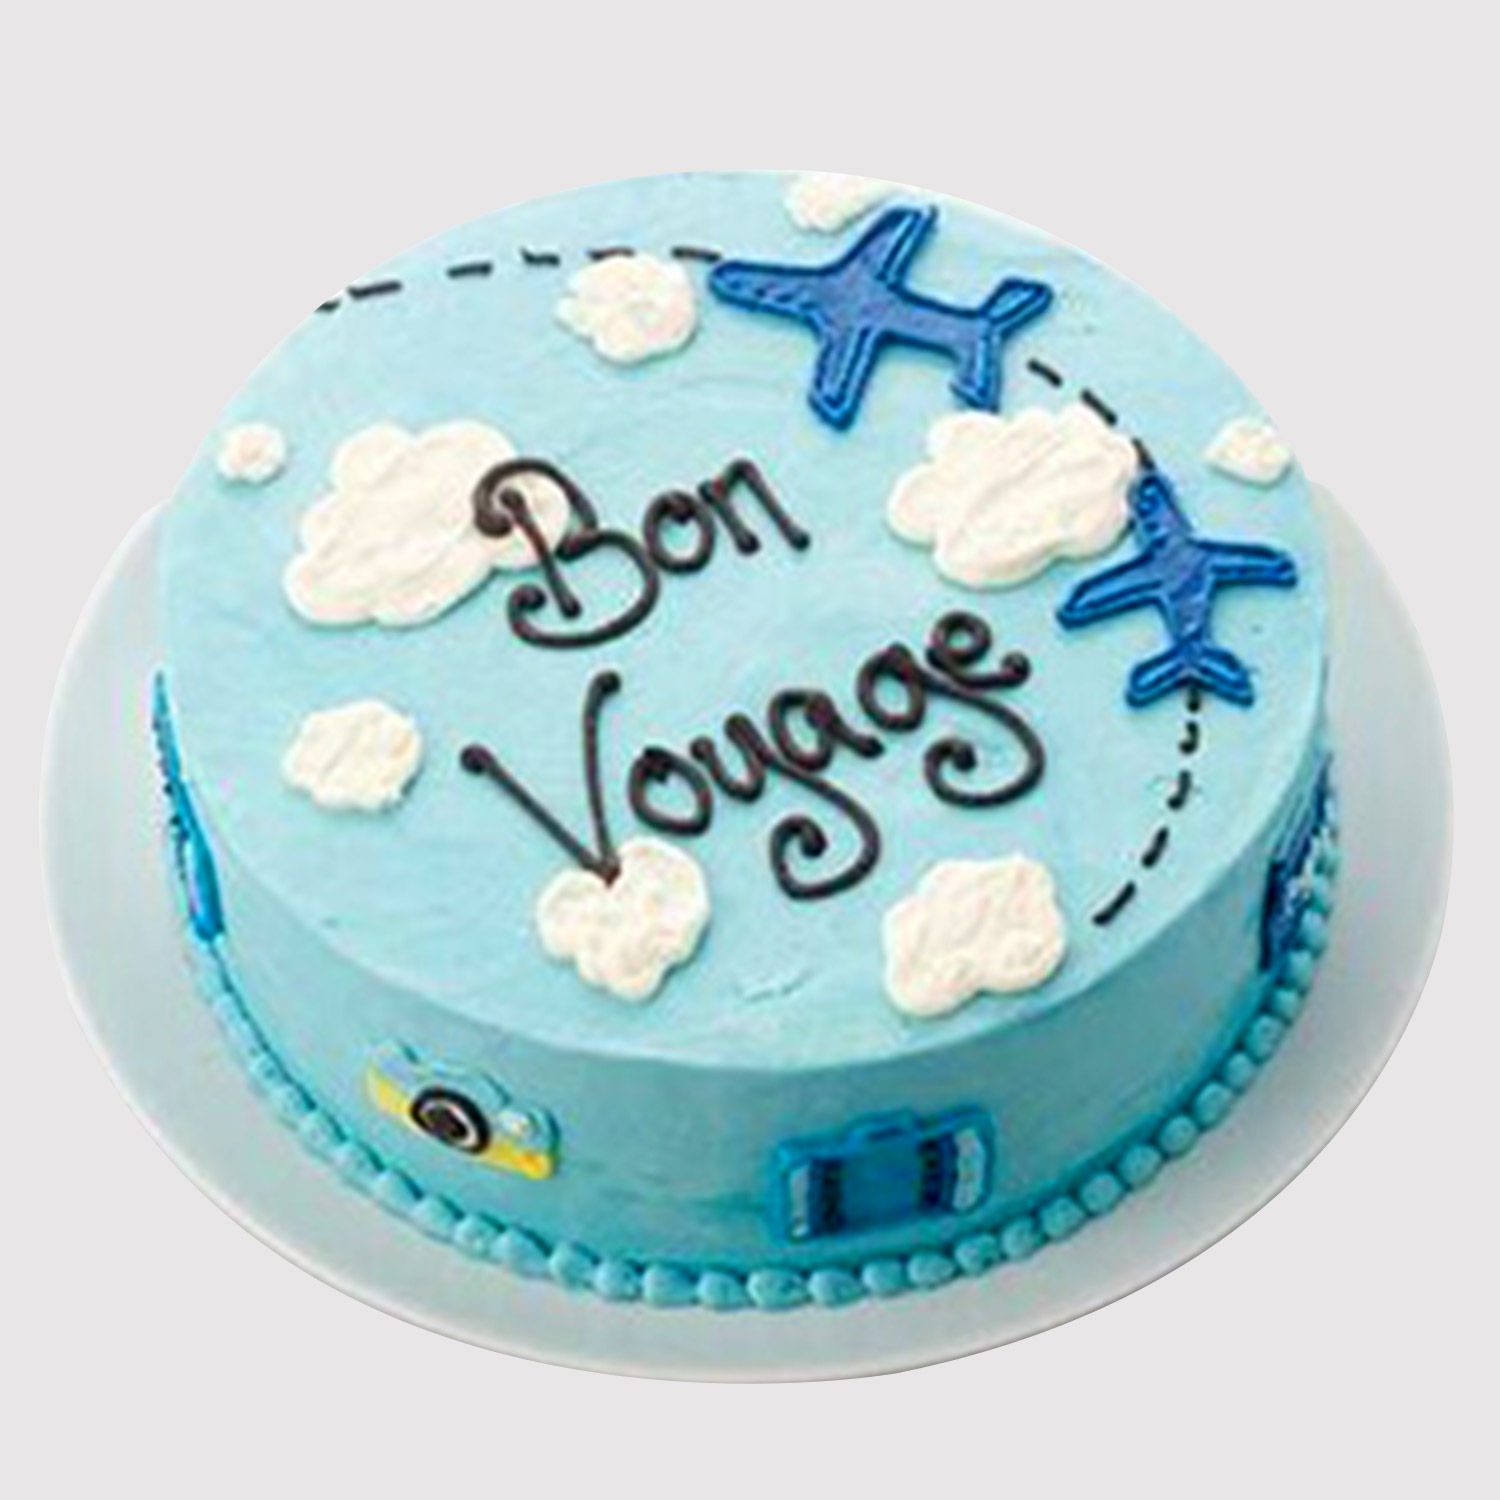 bon voyage party cakes